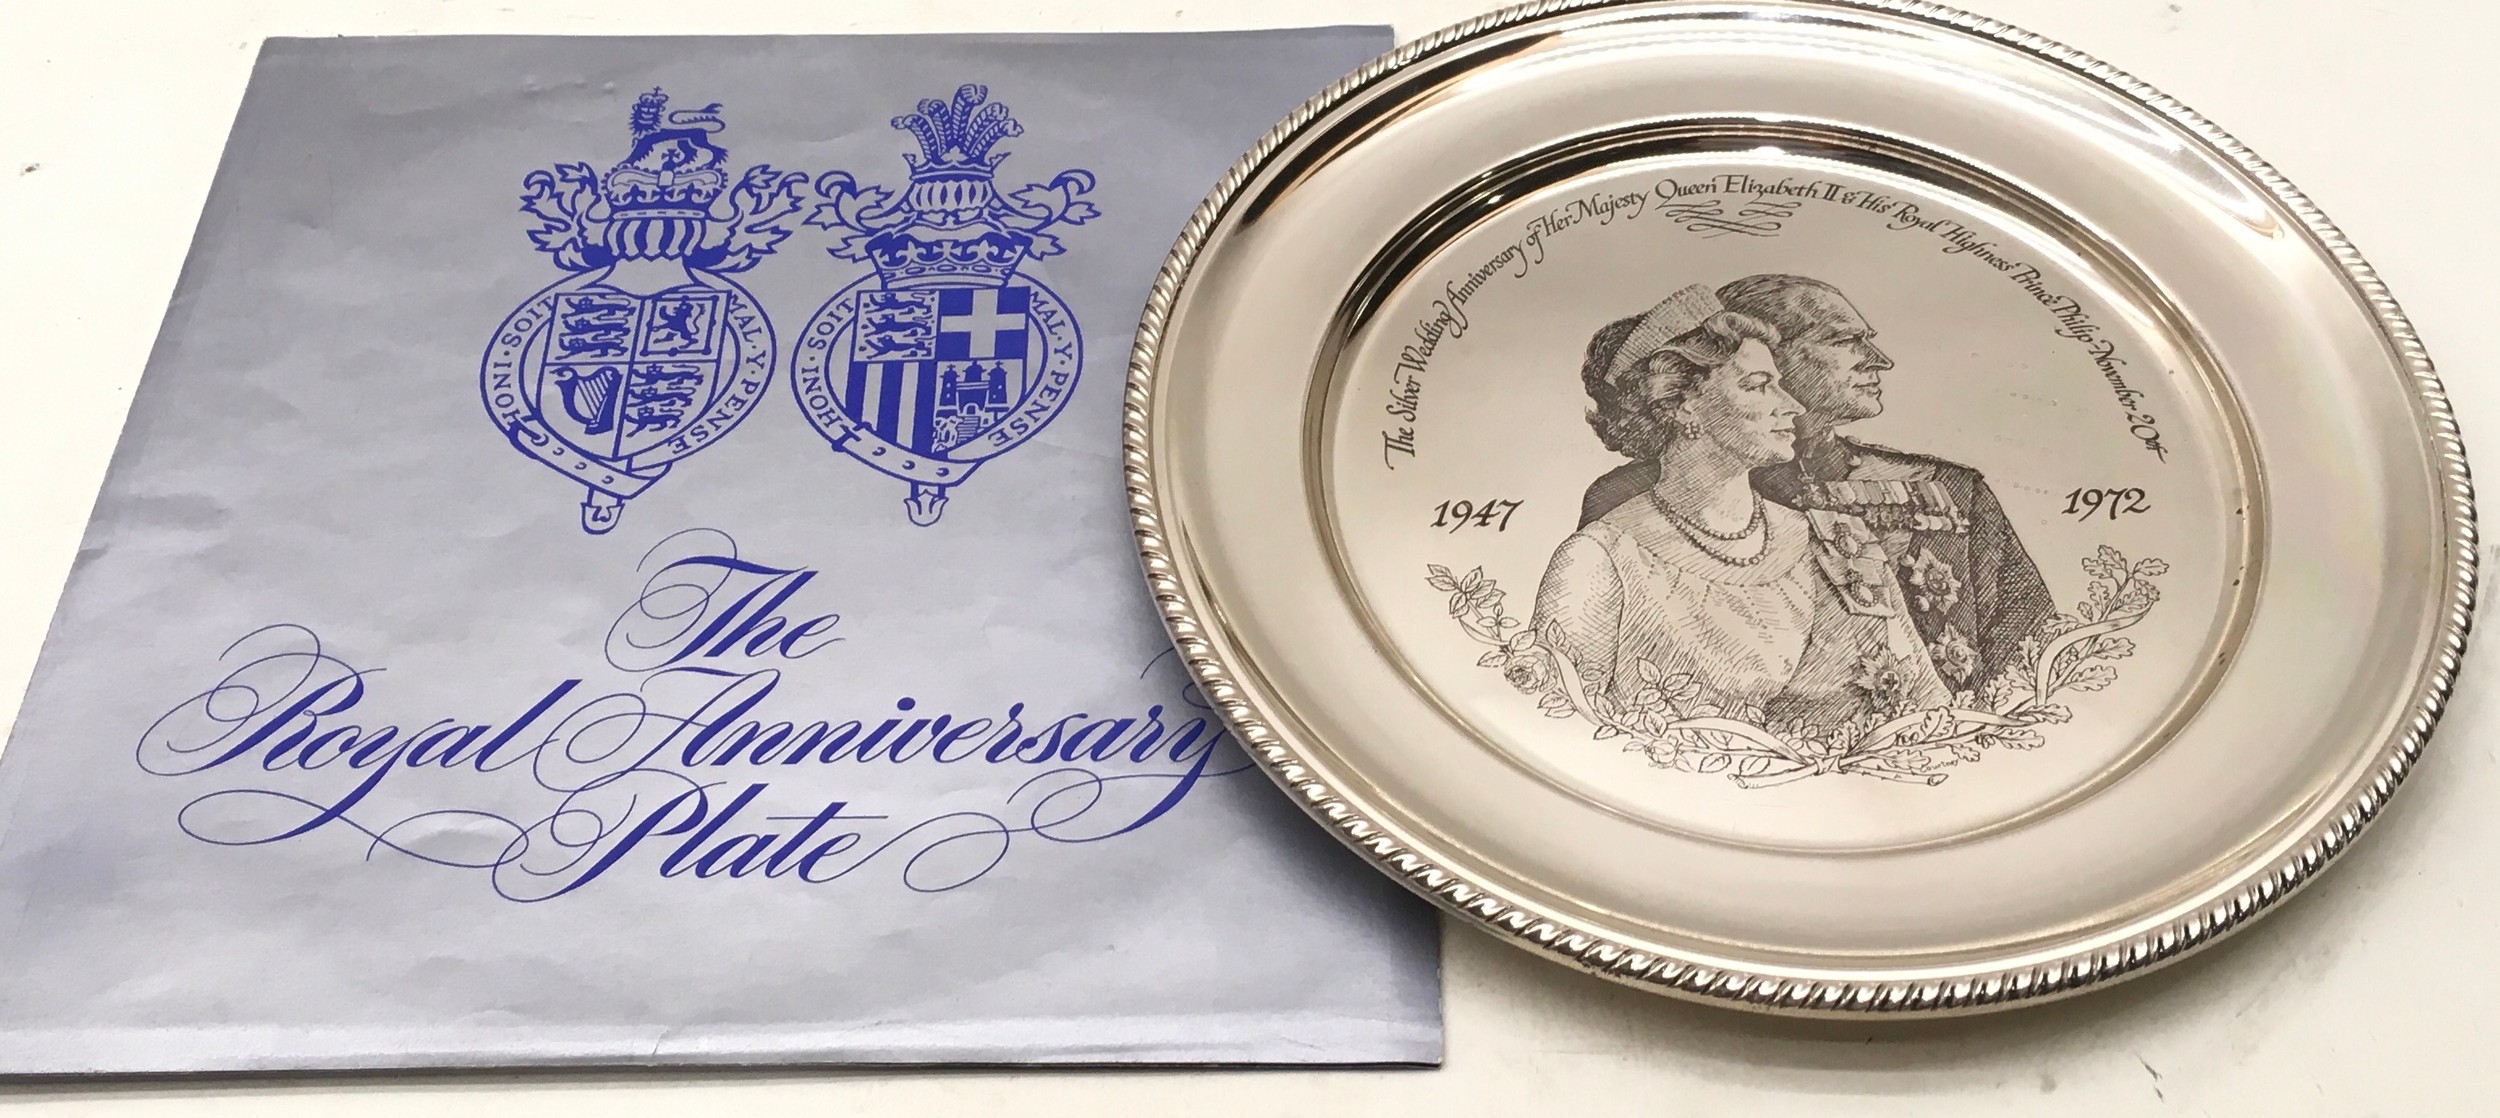 Silver Ltd edition commemorative plate to celebrate Queen Elizabeth II silver wedding anniversary in - Image 2 of 7